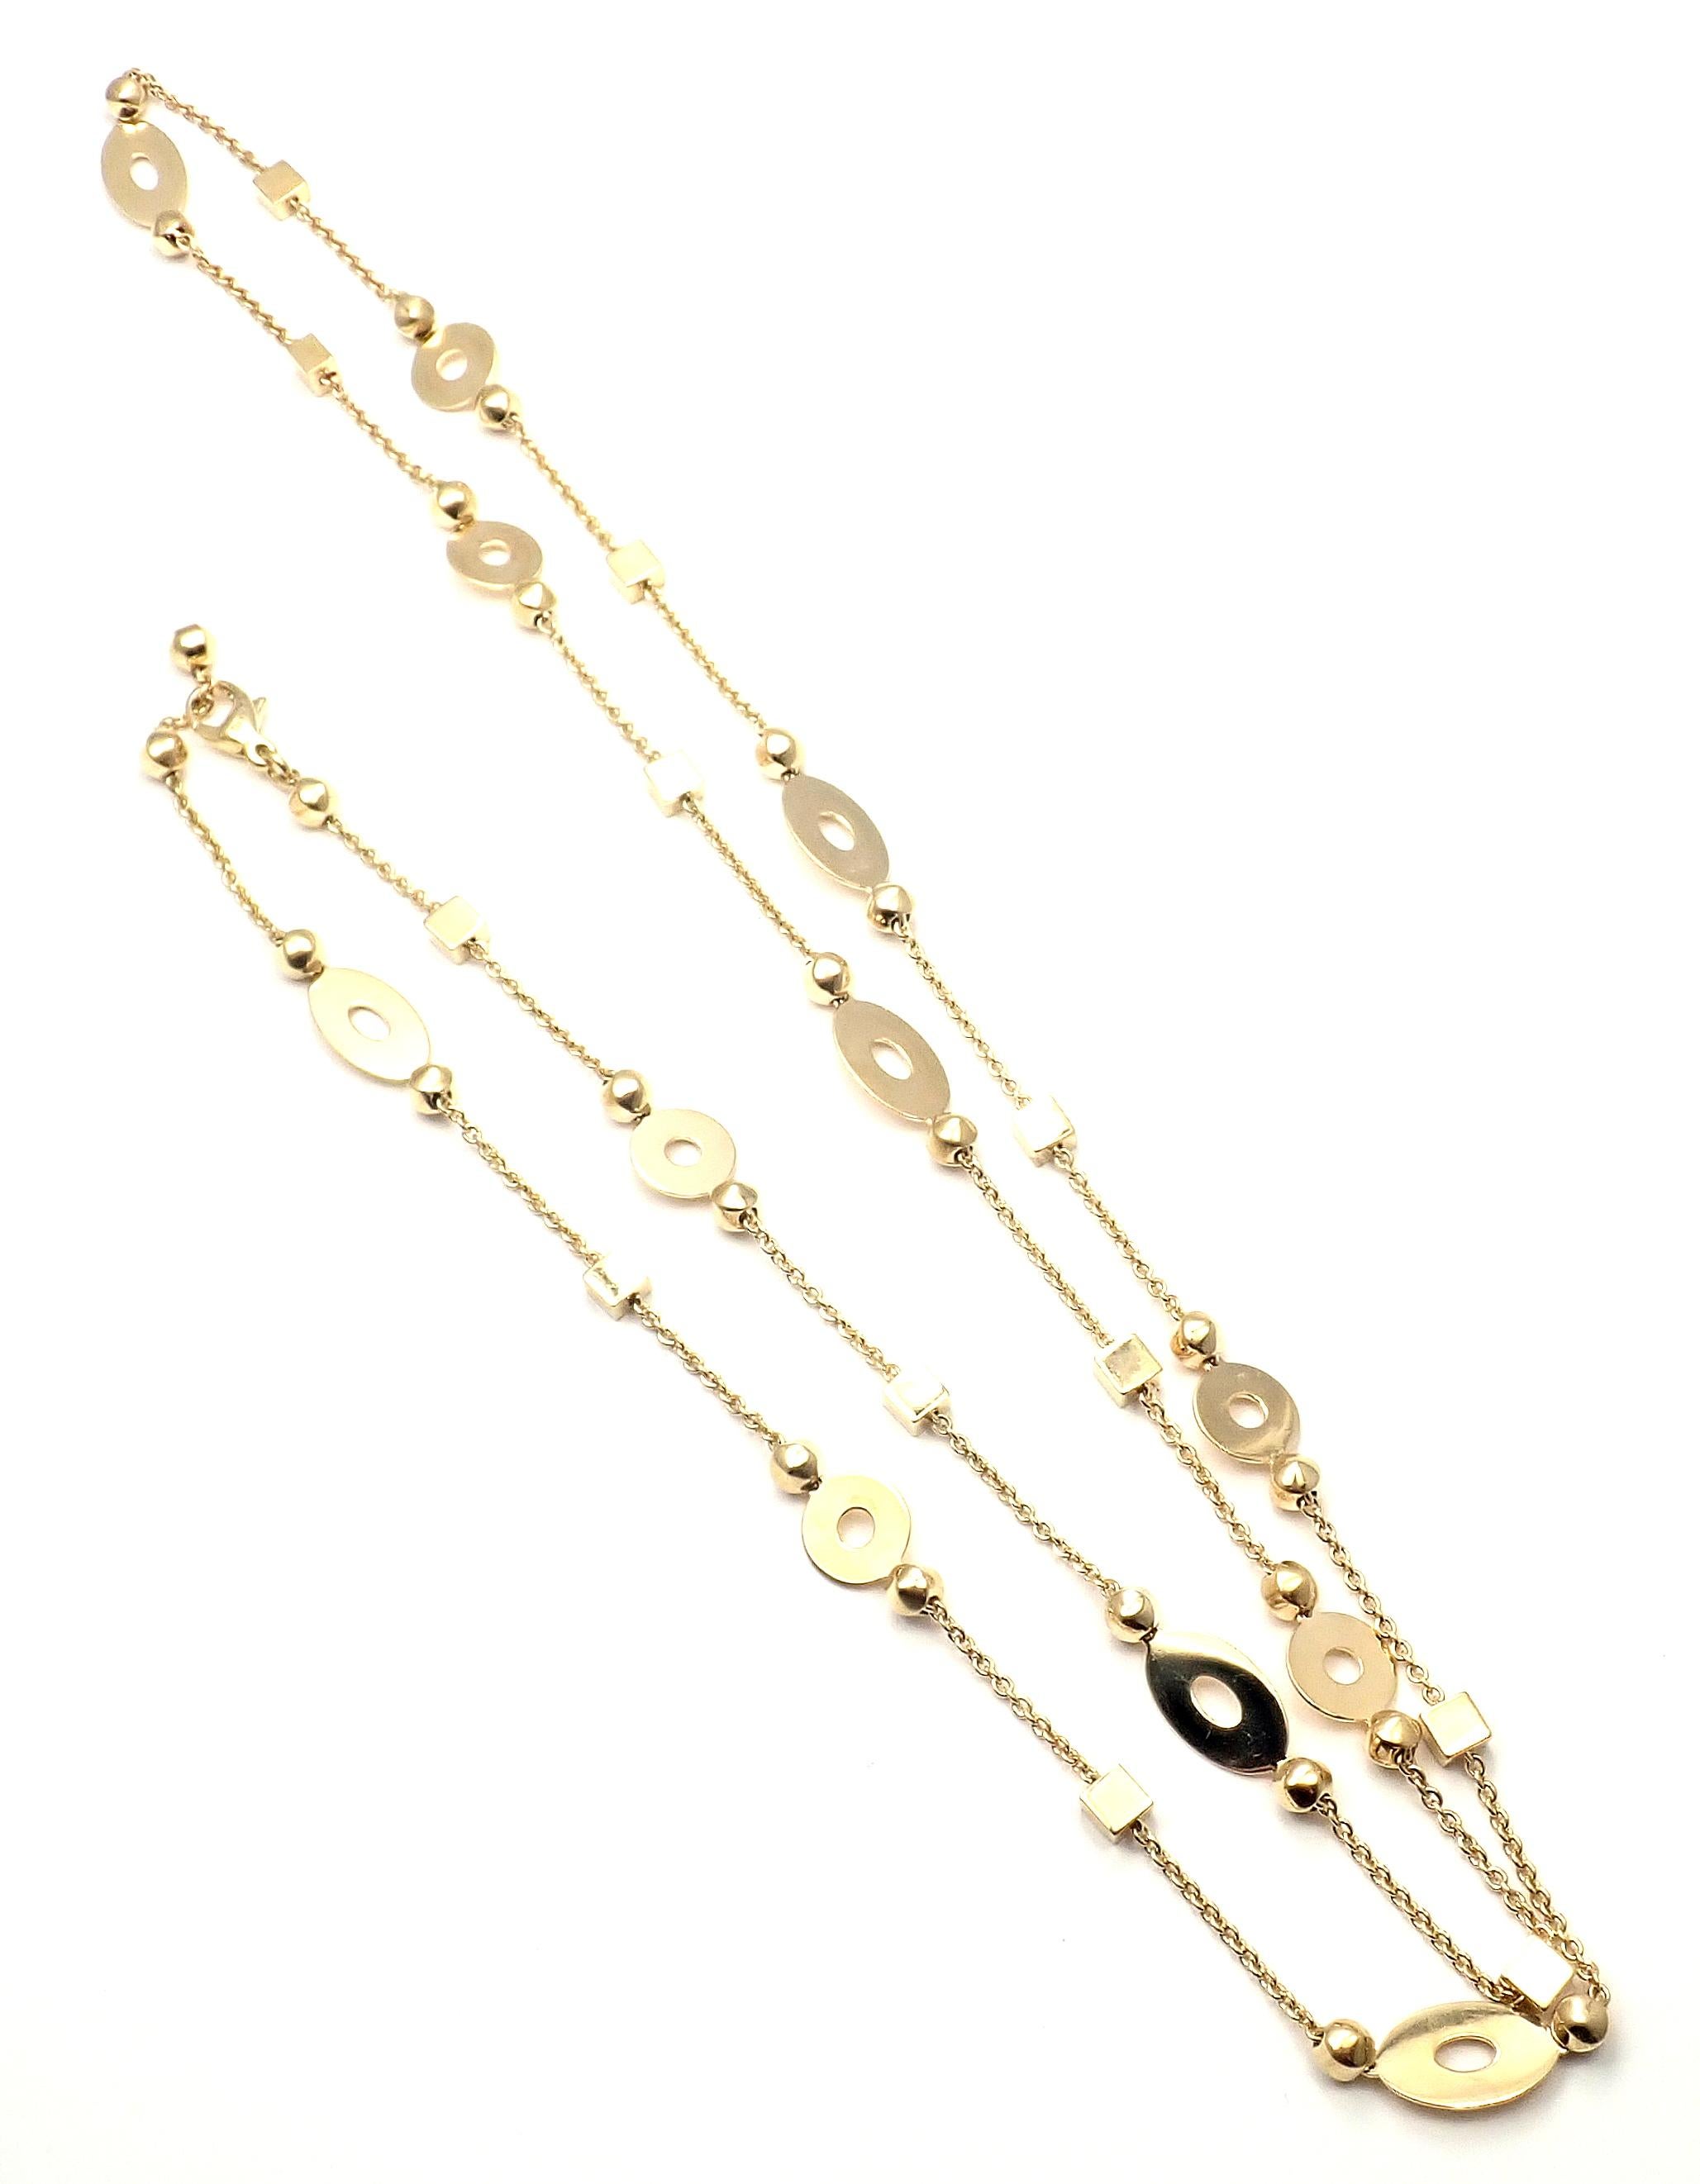 Women's or Men's Bulgari Lucea Long Link Yellow Gold Chain Necklace